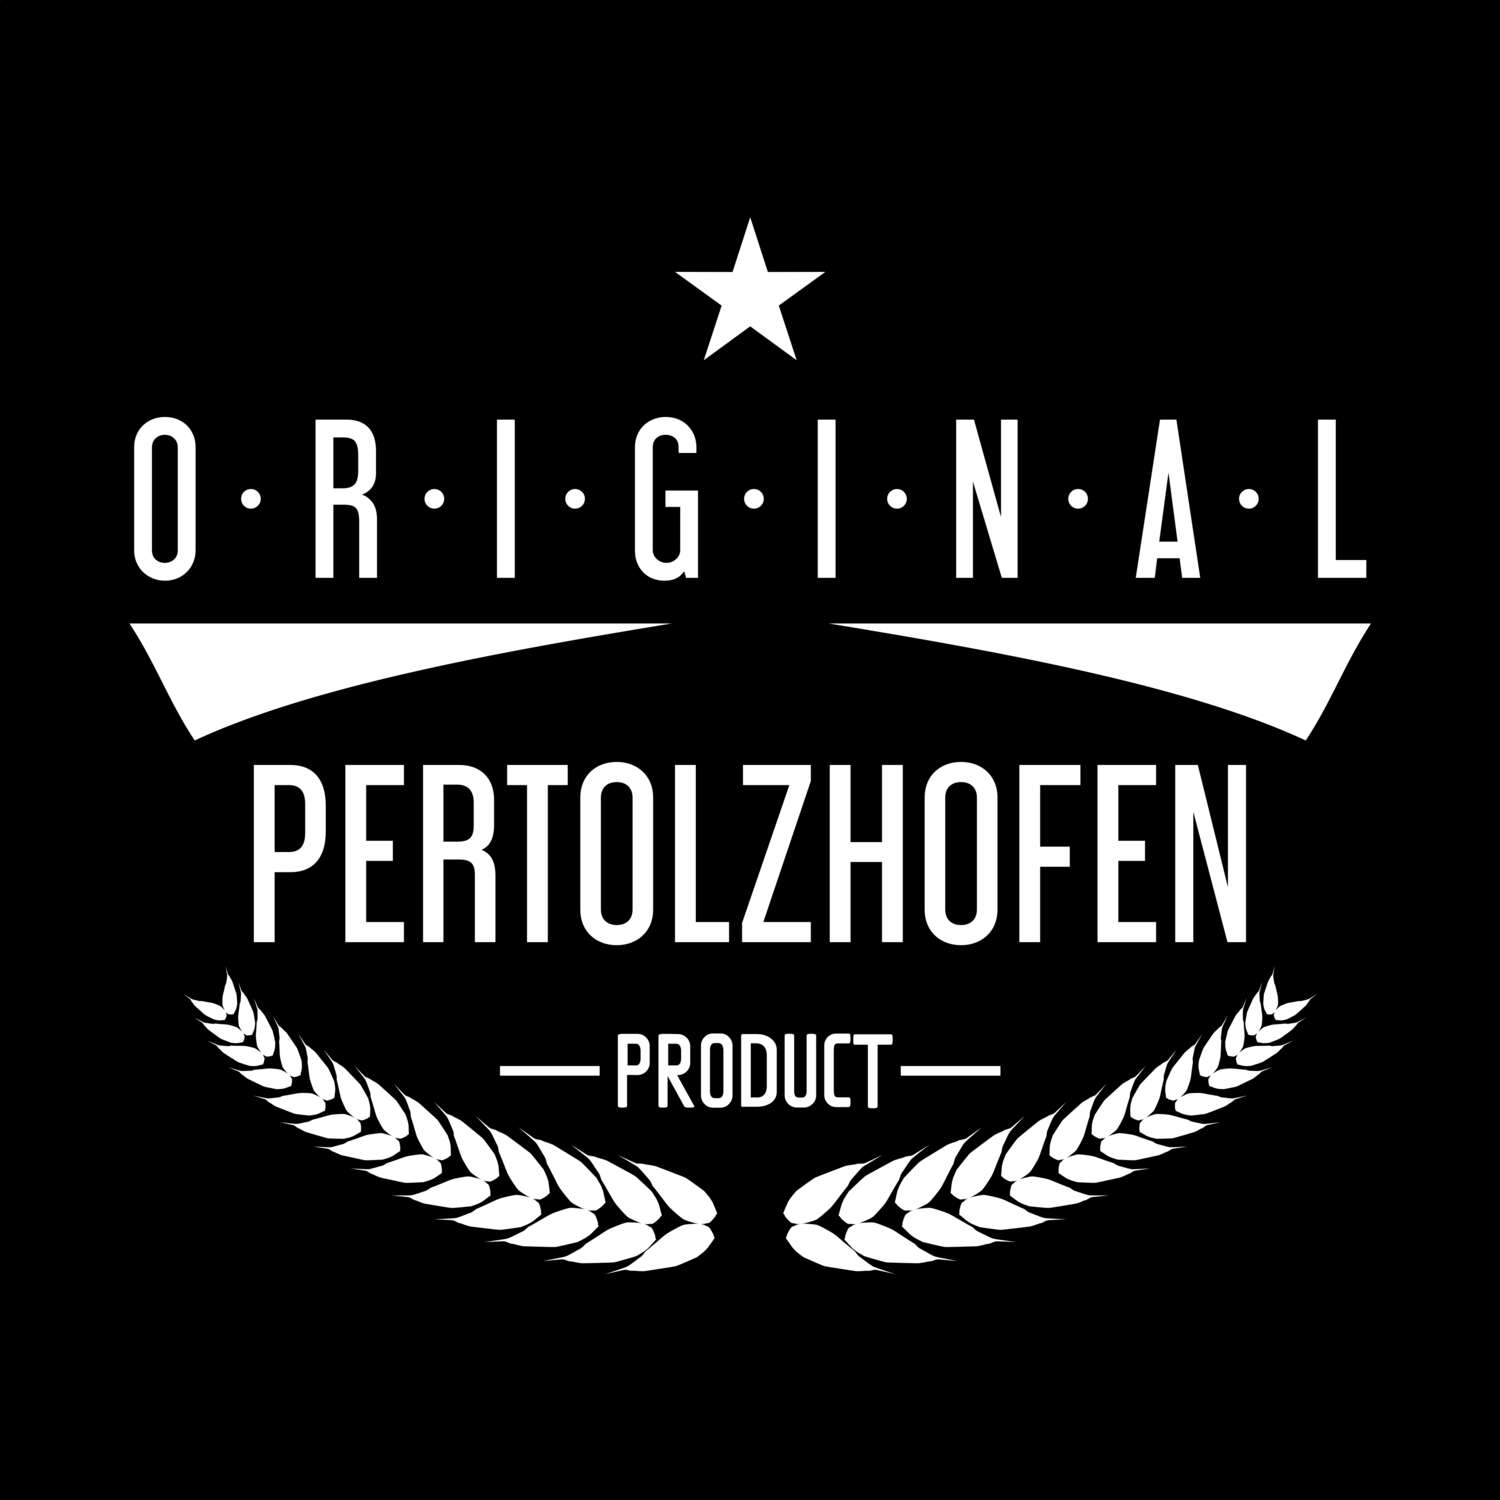 Pertolzhofen T-Shirt »Original Product«